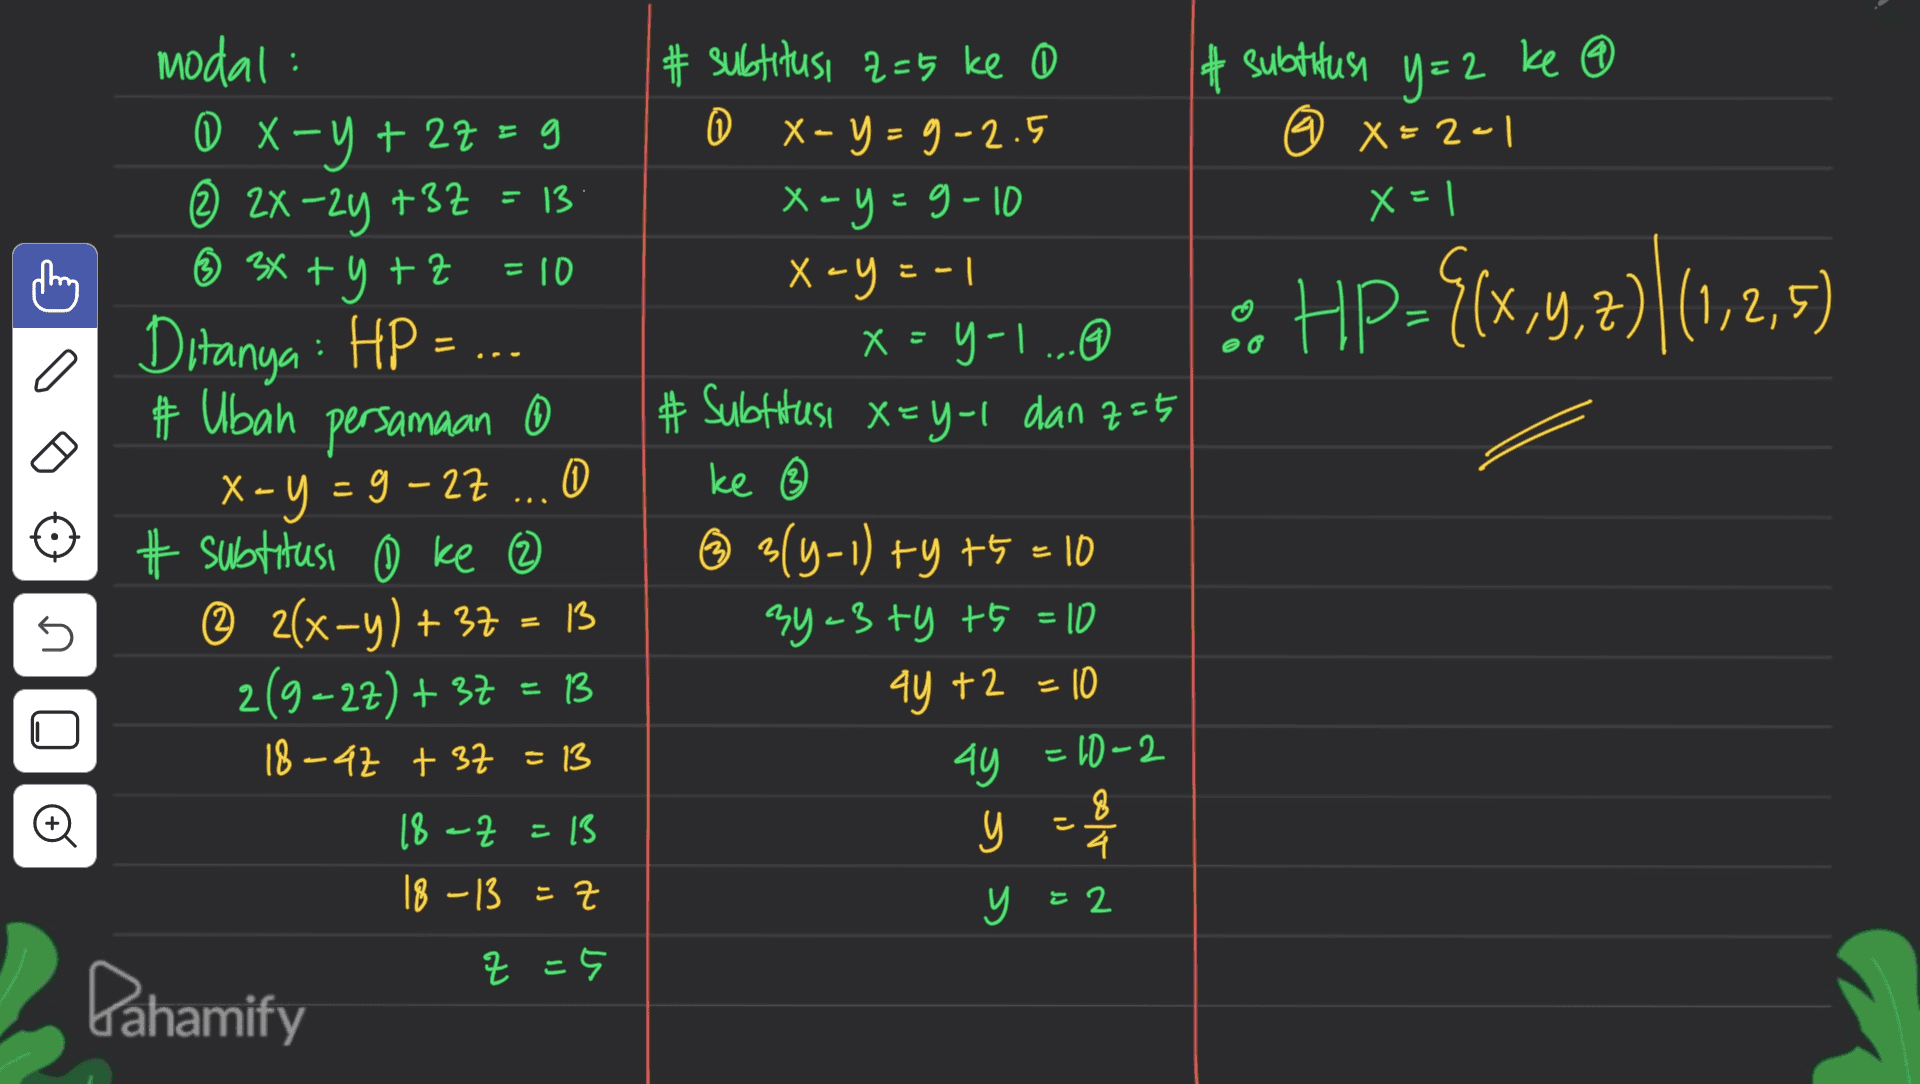 # subtitusi y=2 ke @ 6 x=2-1 x=1 = HP-{(x,,z)|(1,2,5 ) - modal: 08-y+ 2z=g © 2x -2y +3Z = 13 6 z ® 3x + y + z = 10 Ditanya : HP = # Uban persamaan 0 0 # subtitusi 0 ke 2 © 2(x−y) + 37 = 13 2(9=27) + 7 = 13 ) 18-42 + 37 = 13 # subtitusi 2=5 ke 0 0 X-y=9-2.5 x=y=9-10 X- = xy X-Y = -1 - X = Y-1...@ # Subtitusi x=y-1 dan z=5 ke ③ 3(4-1) ty +5 = 10 3y=3 ty t5 = 10 X-Y = 9 – 27 = 5 n o 4y +2 = 10 44 =10-2 18 -Z=13 18-13 = 7 근 4y y = 8 y 4 y = 2 Z=5 - Pahamify 